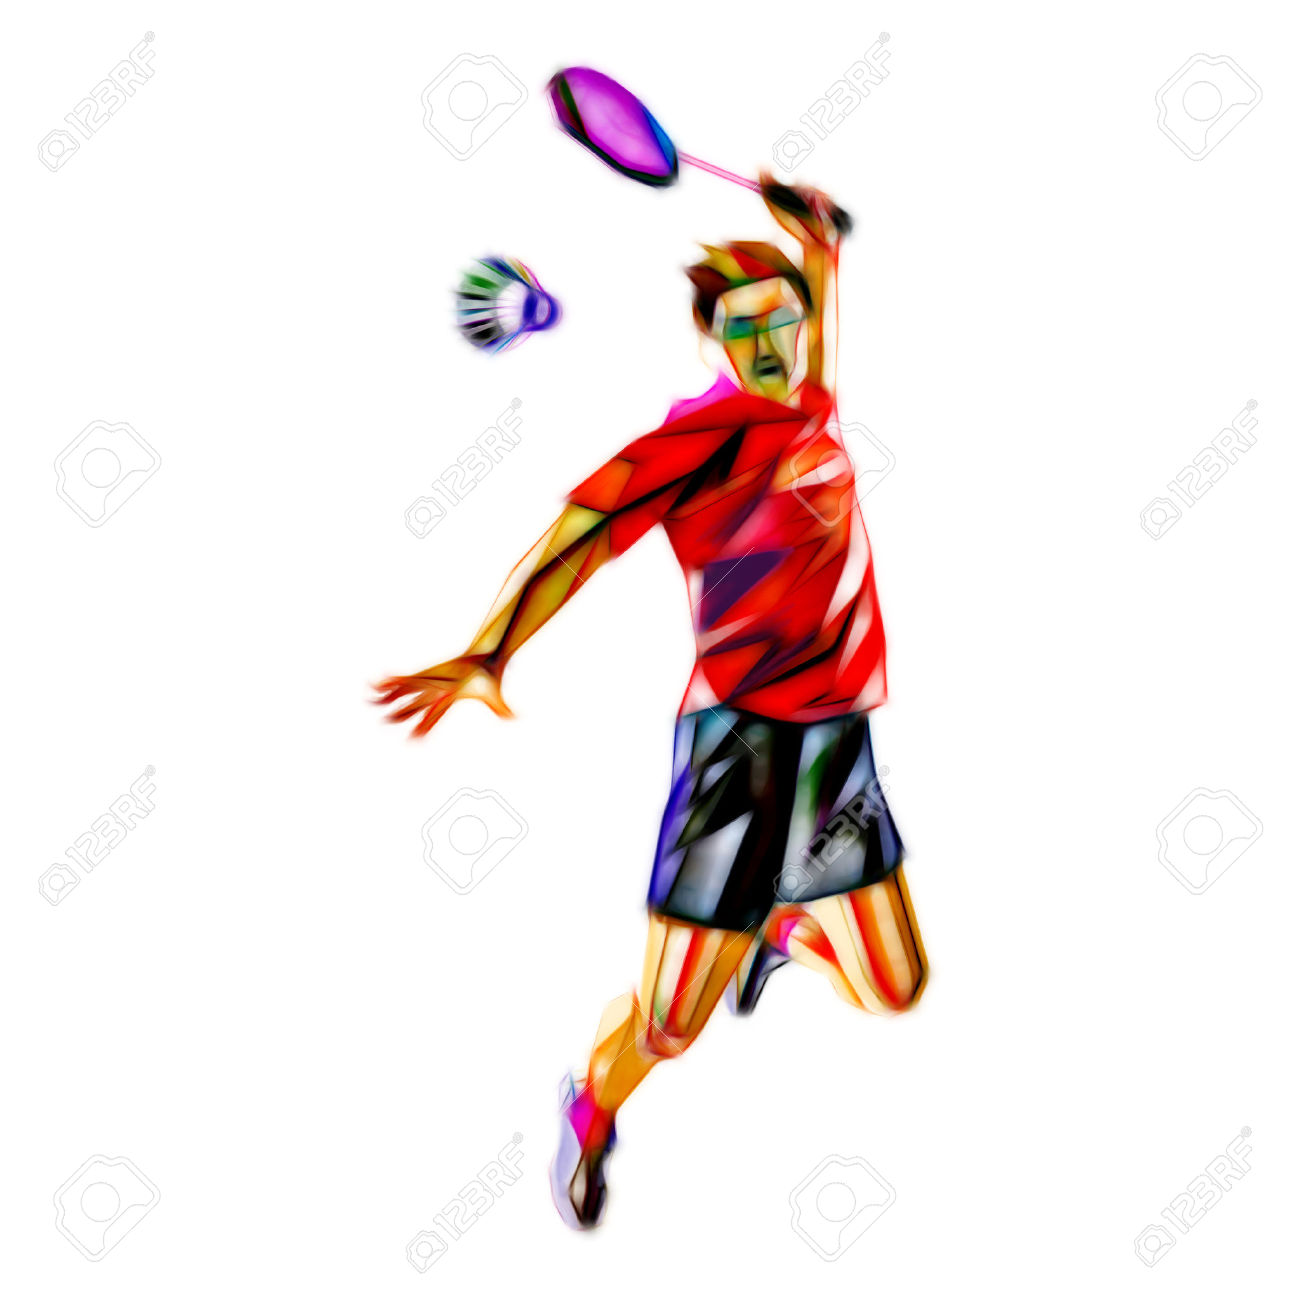 Badminton clipart illustration. Player collection polygonal geometric